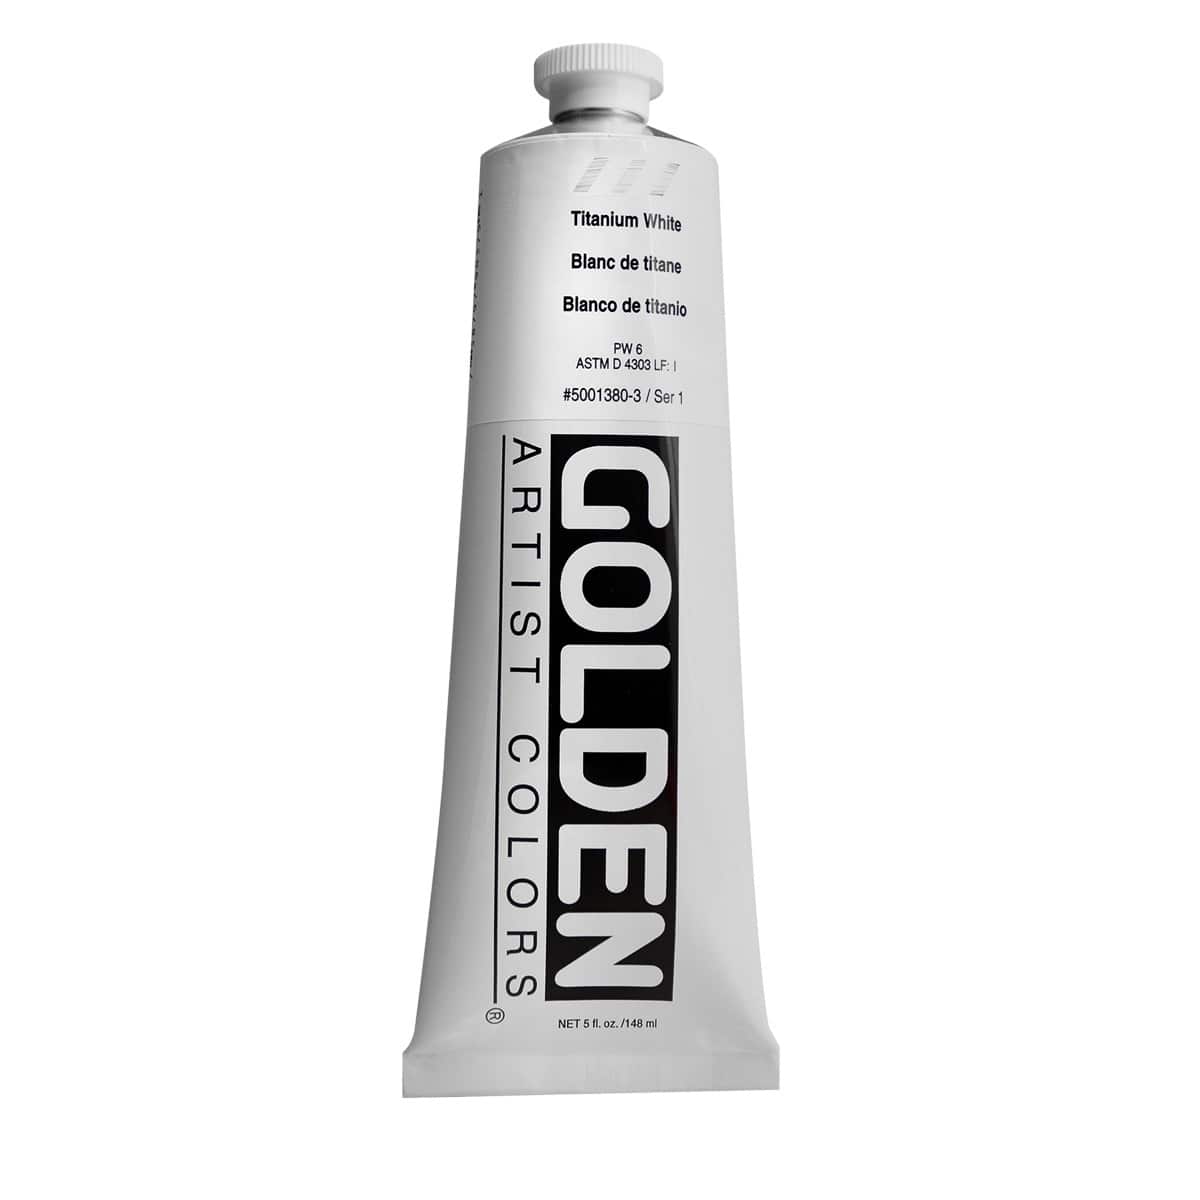 Golden® Heavy Body Acrylic Traditional Paint Set